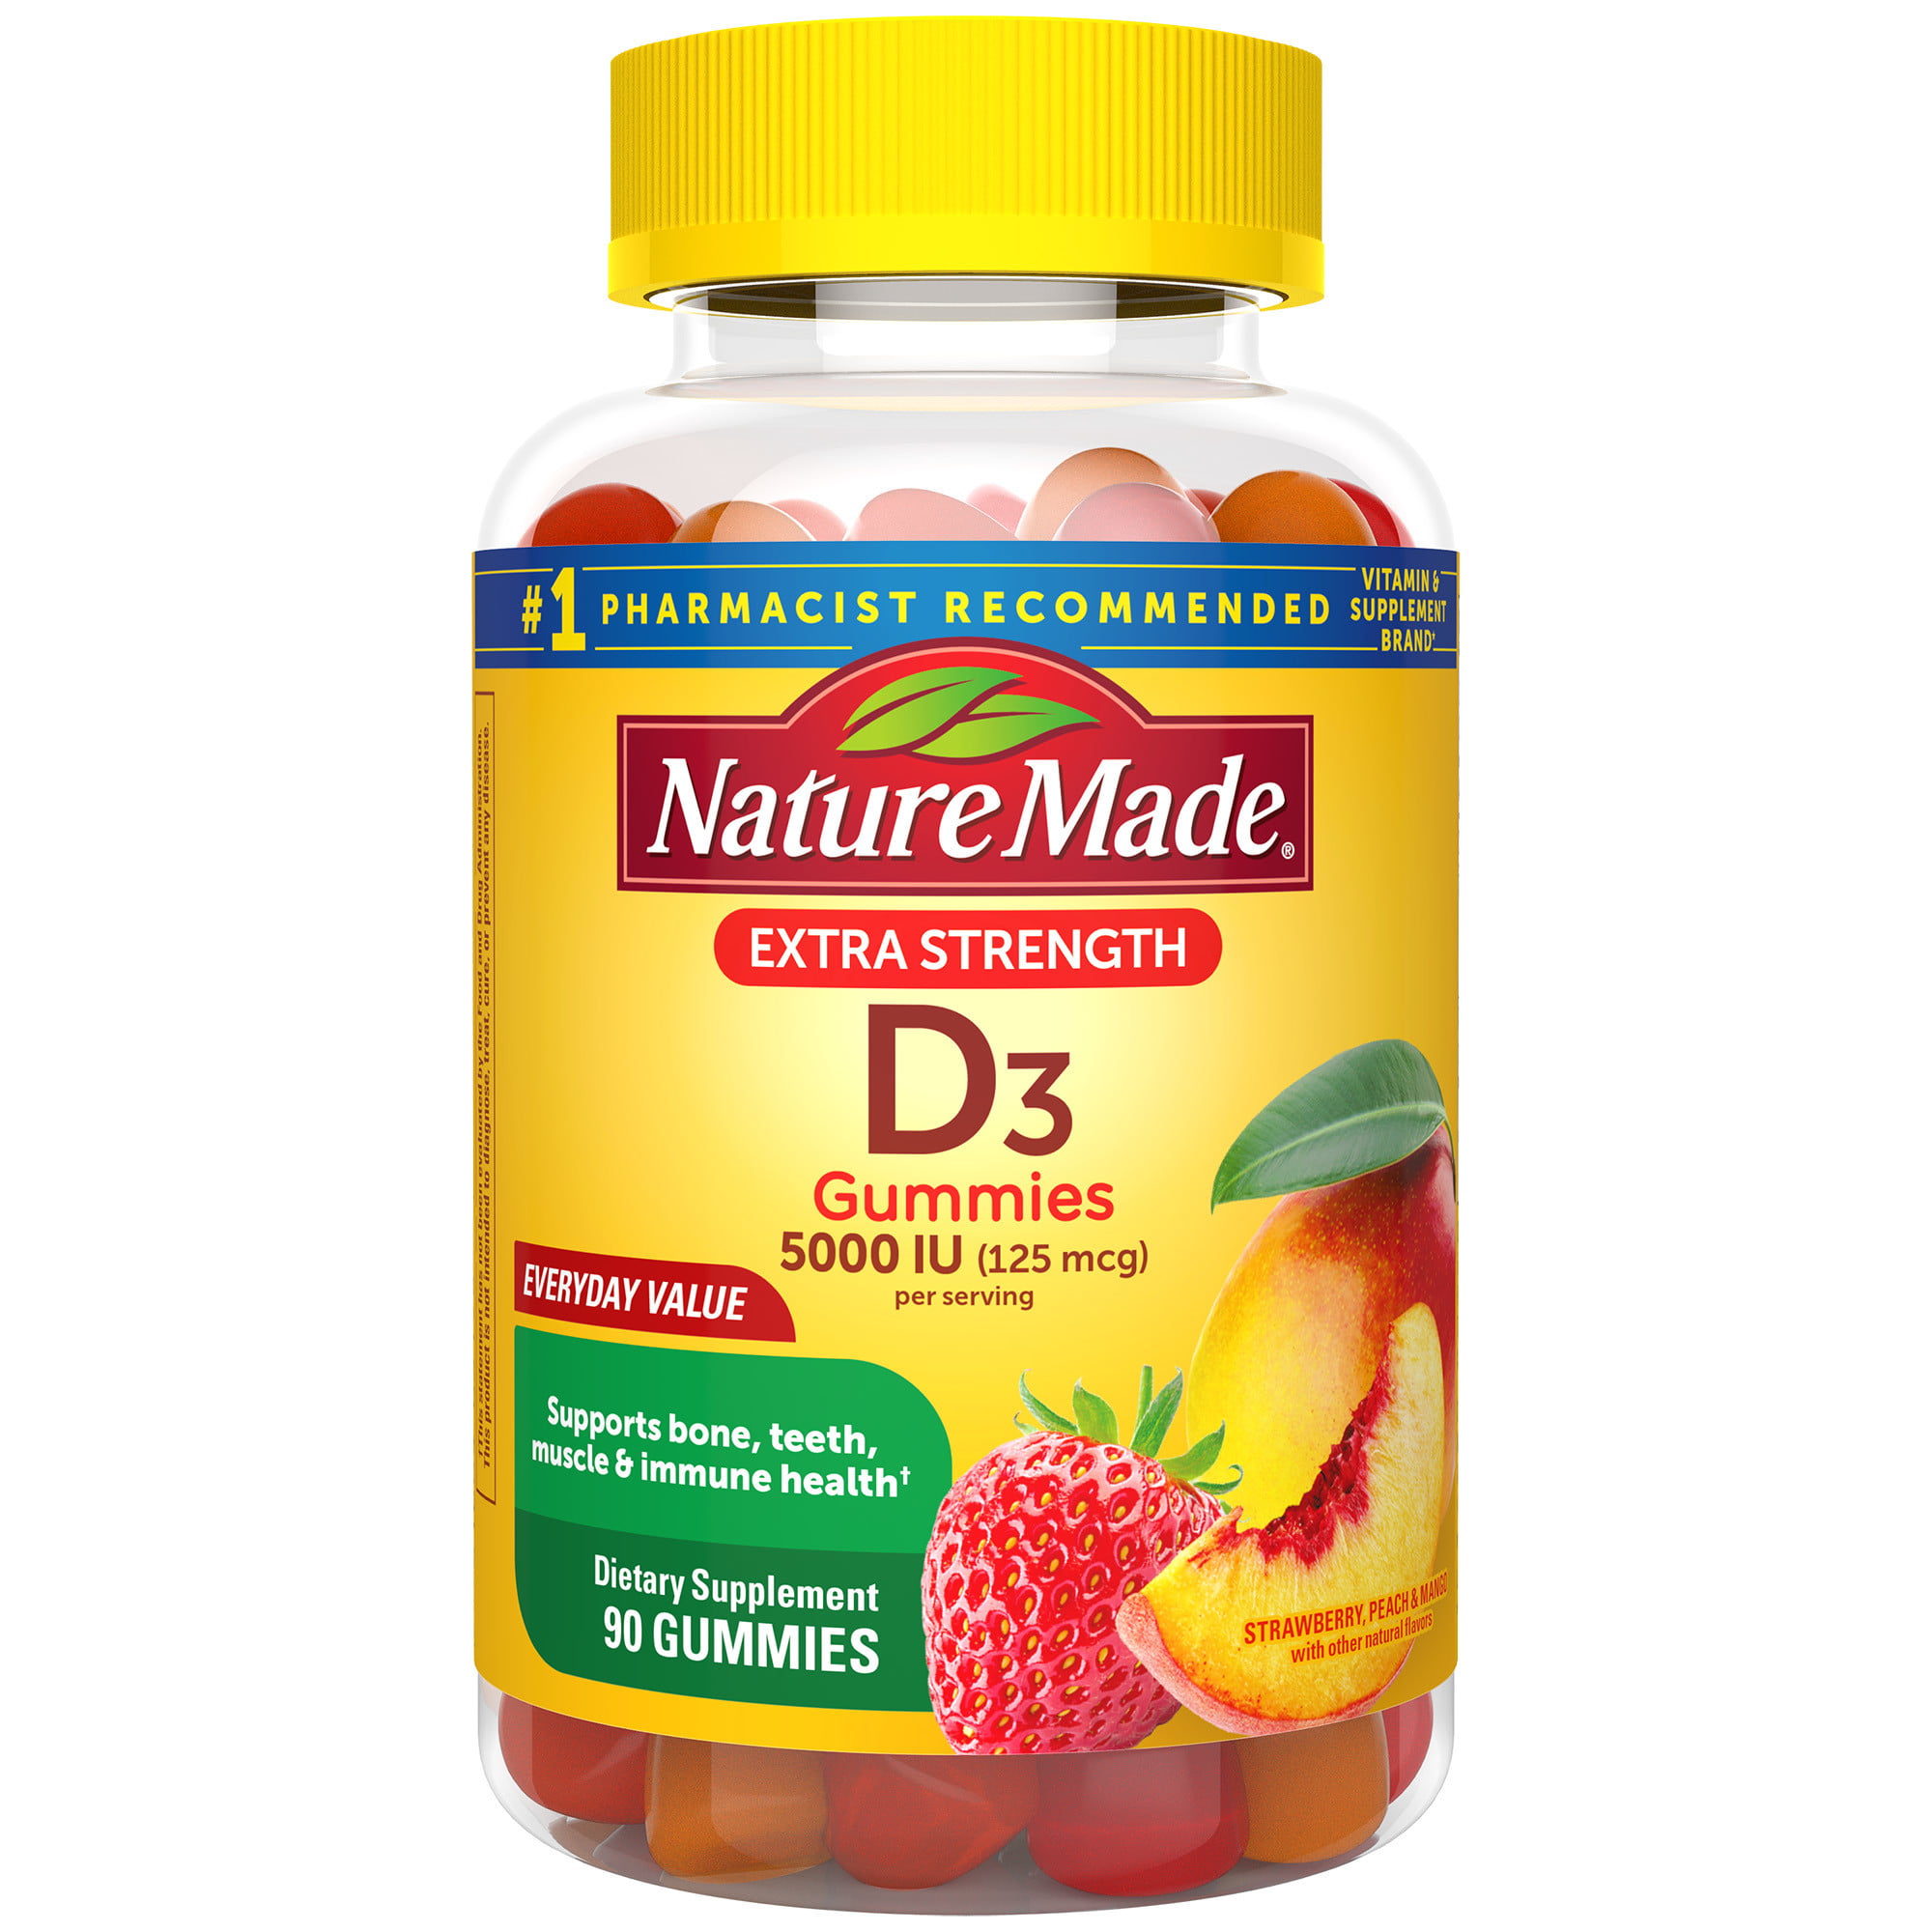 Nature Made Extra Strength Vitamin D3 125 mcg (5000 IU) Gummies, 90